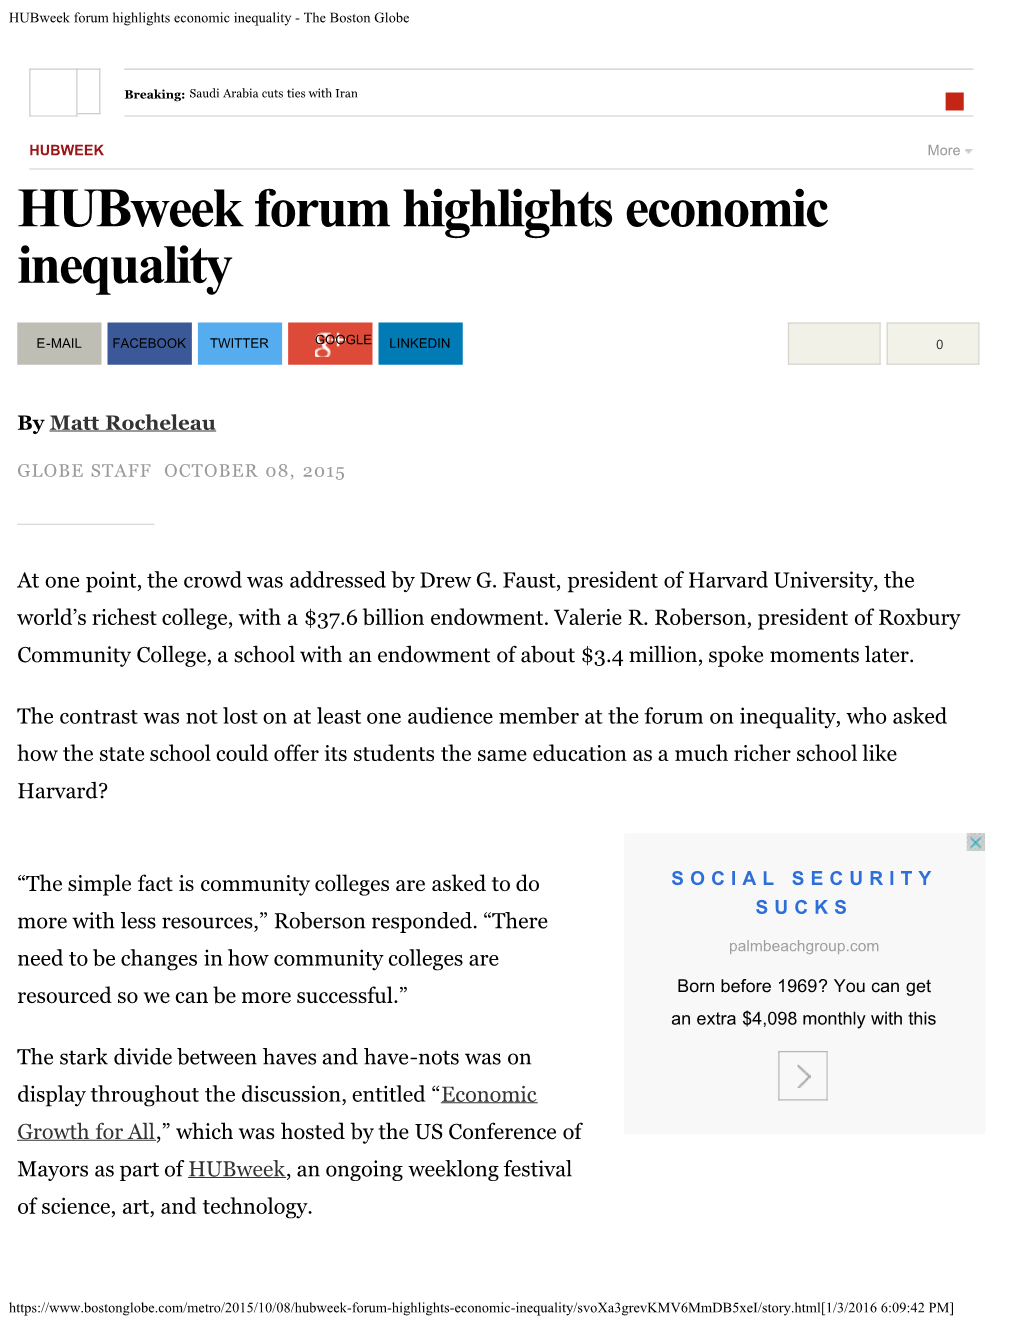 Hubweek Forum Highlights Economic Inequality - the Boston Globe